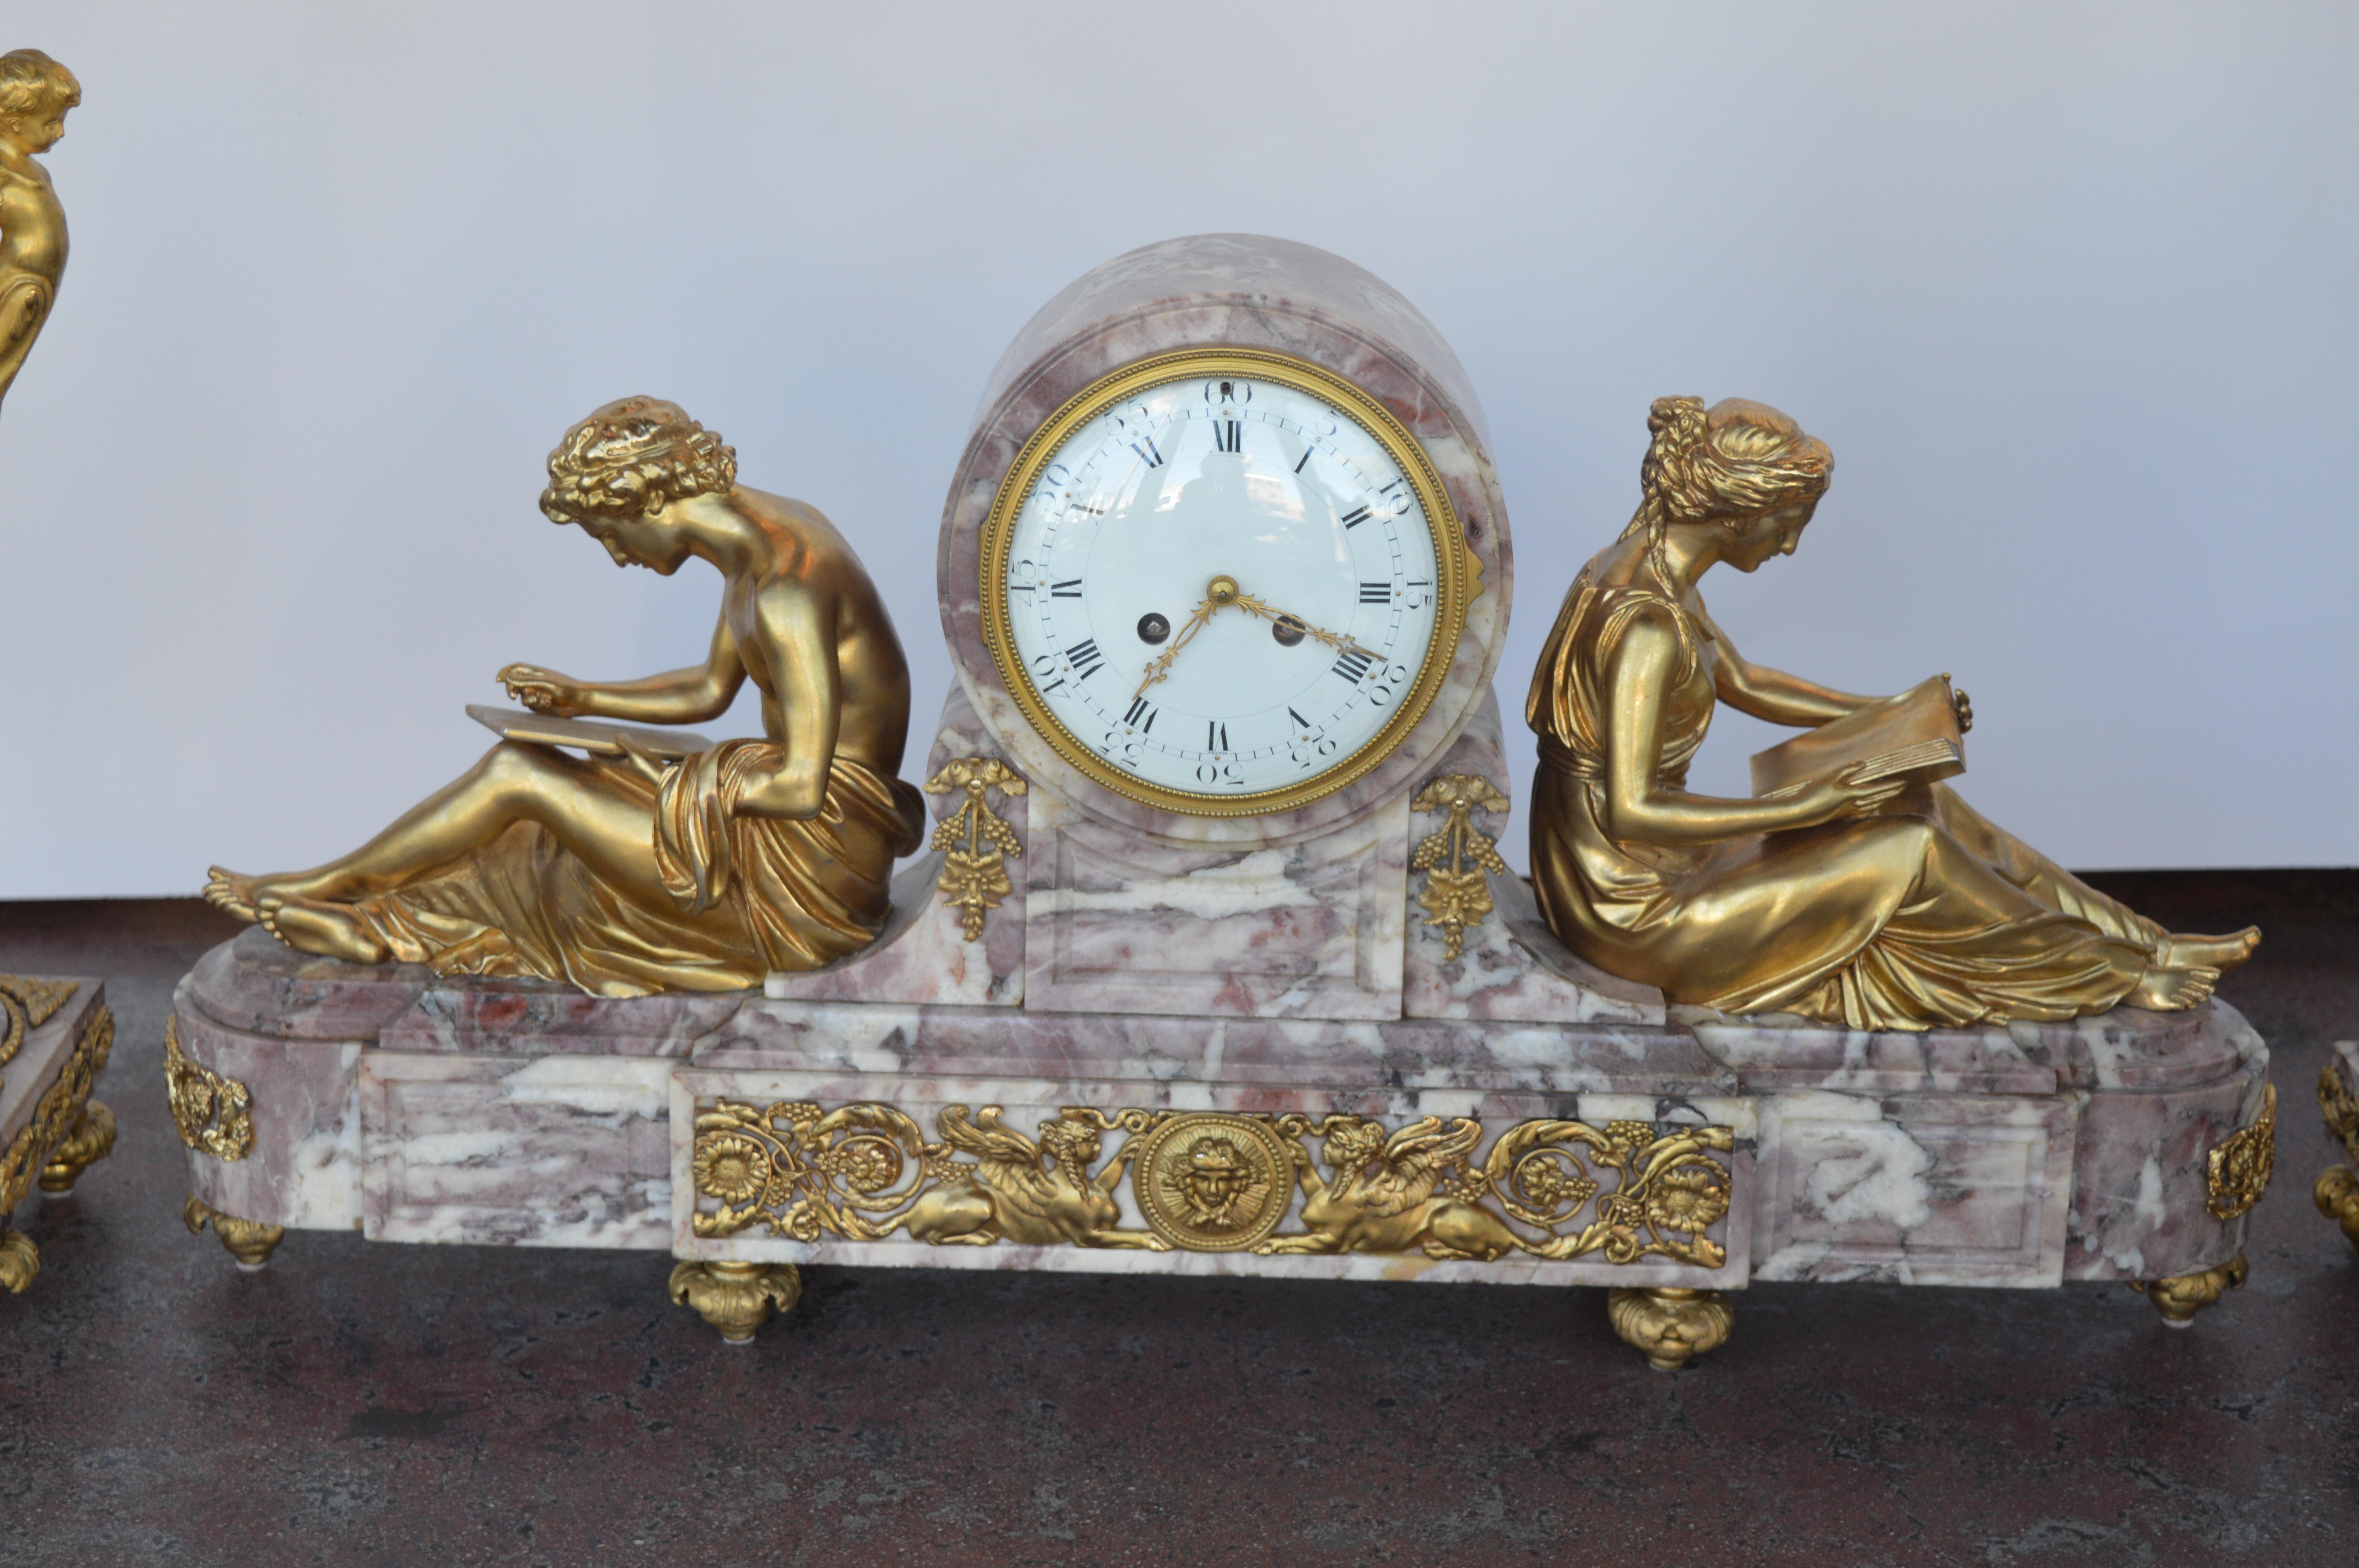 19th century gilt bronze ormolu and marble clock set.

Measurements of candelabras 29.5